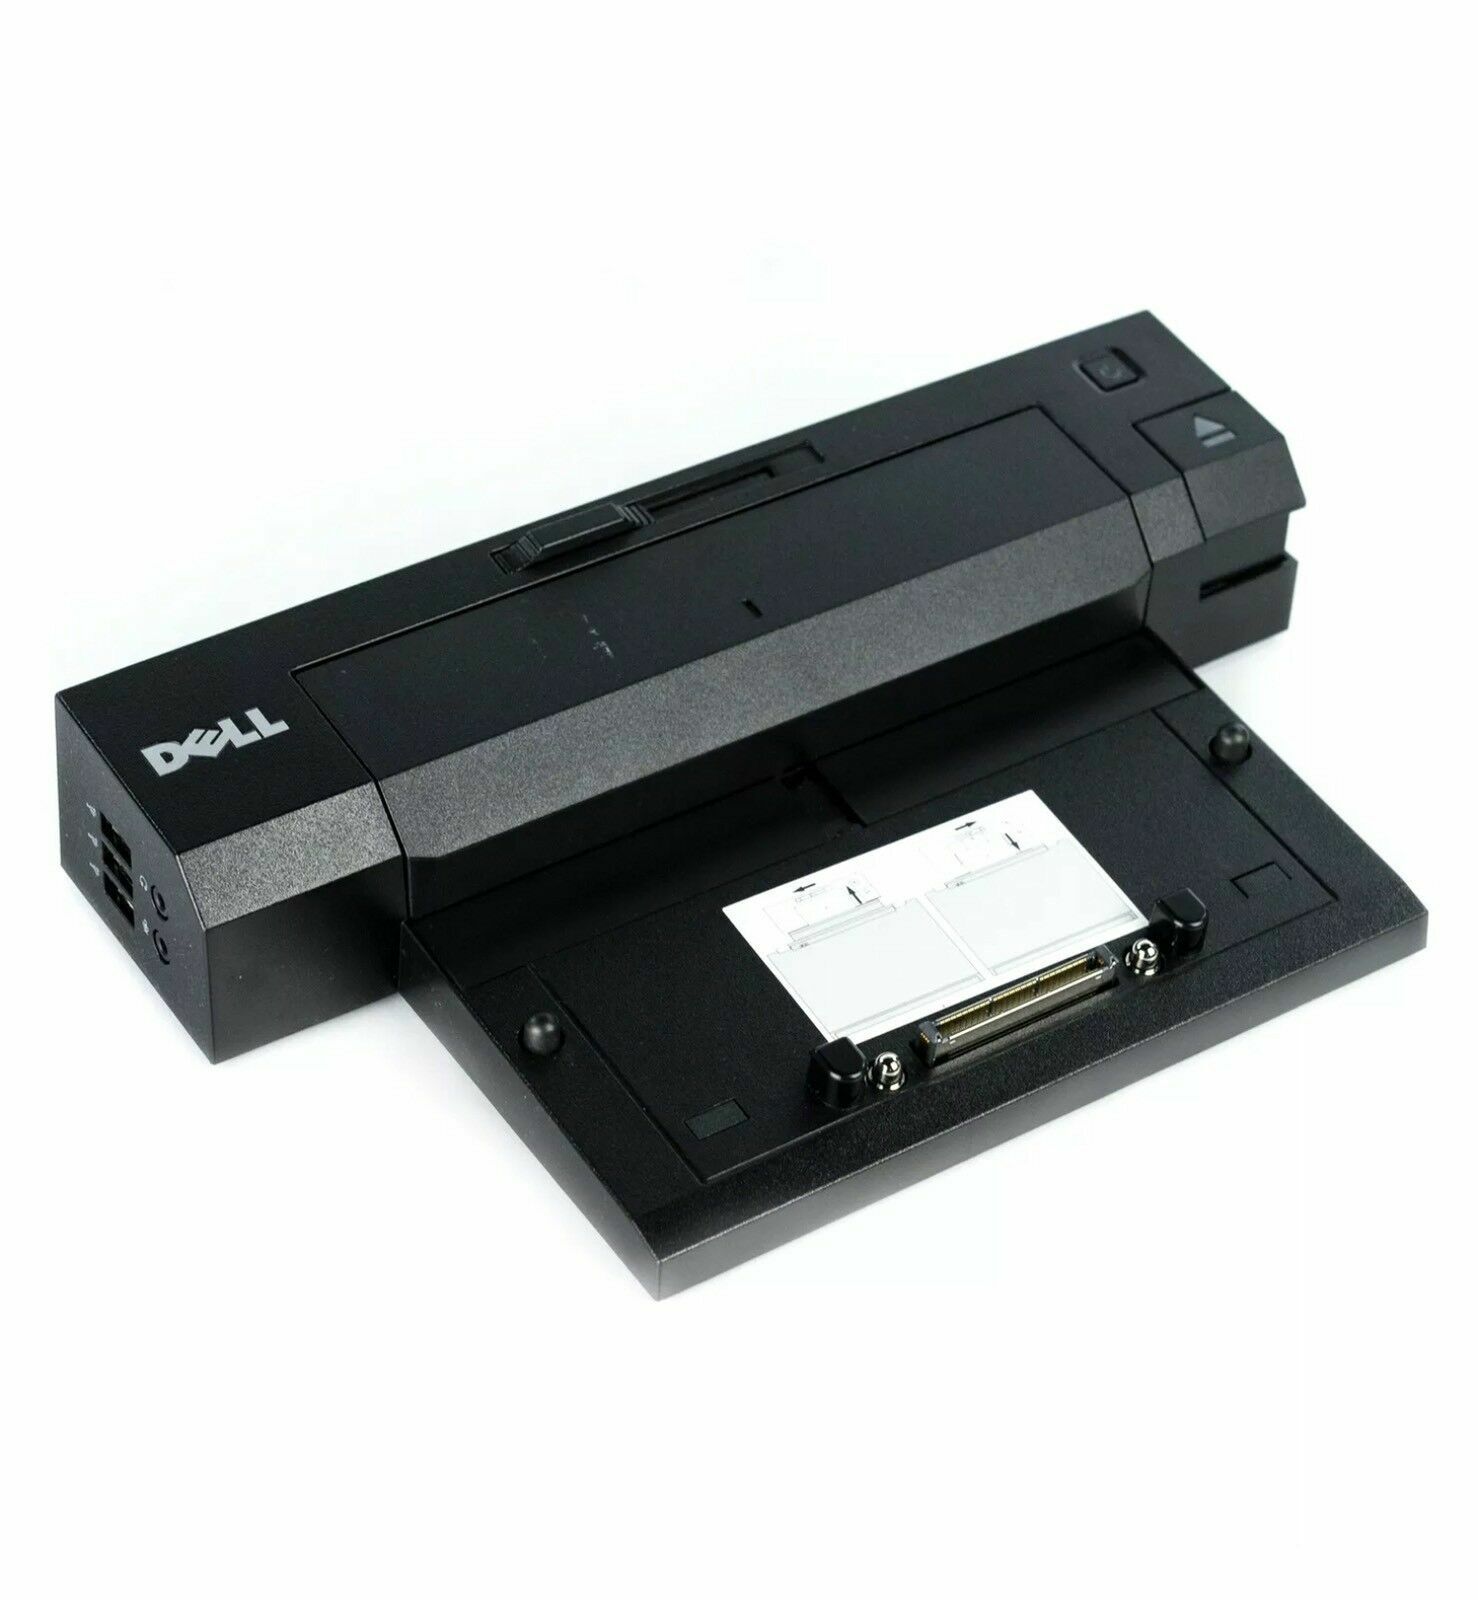 Dell Latitude E5470 E7270 E-Port Plus 3.0 USB Docking Station Port Replicator